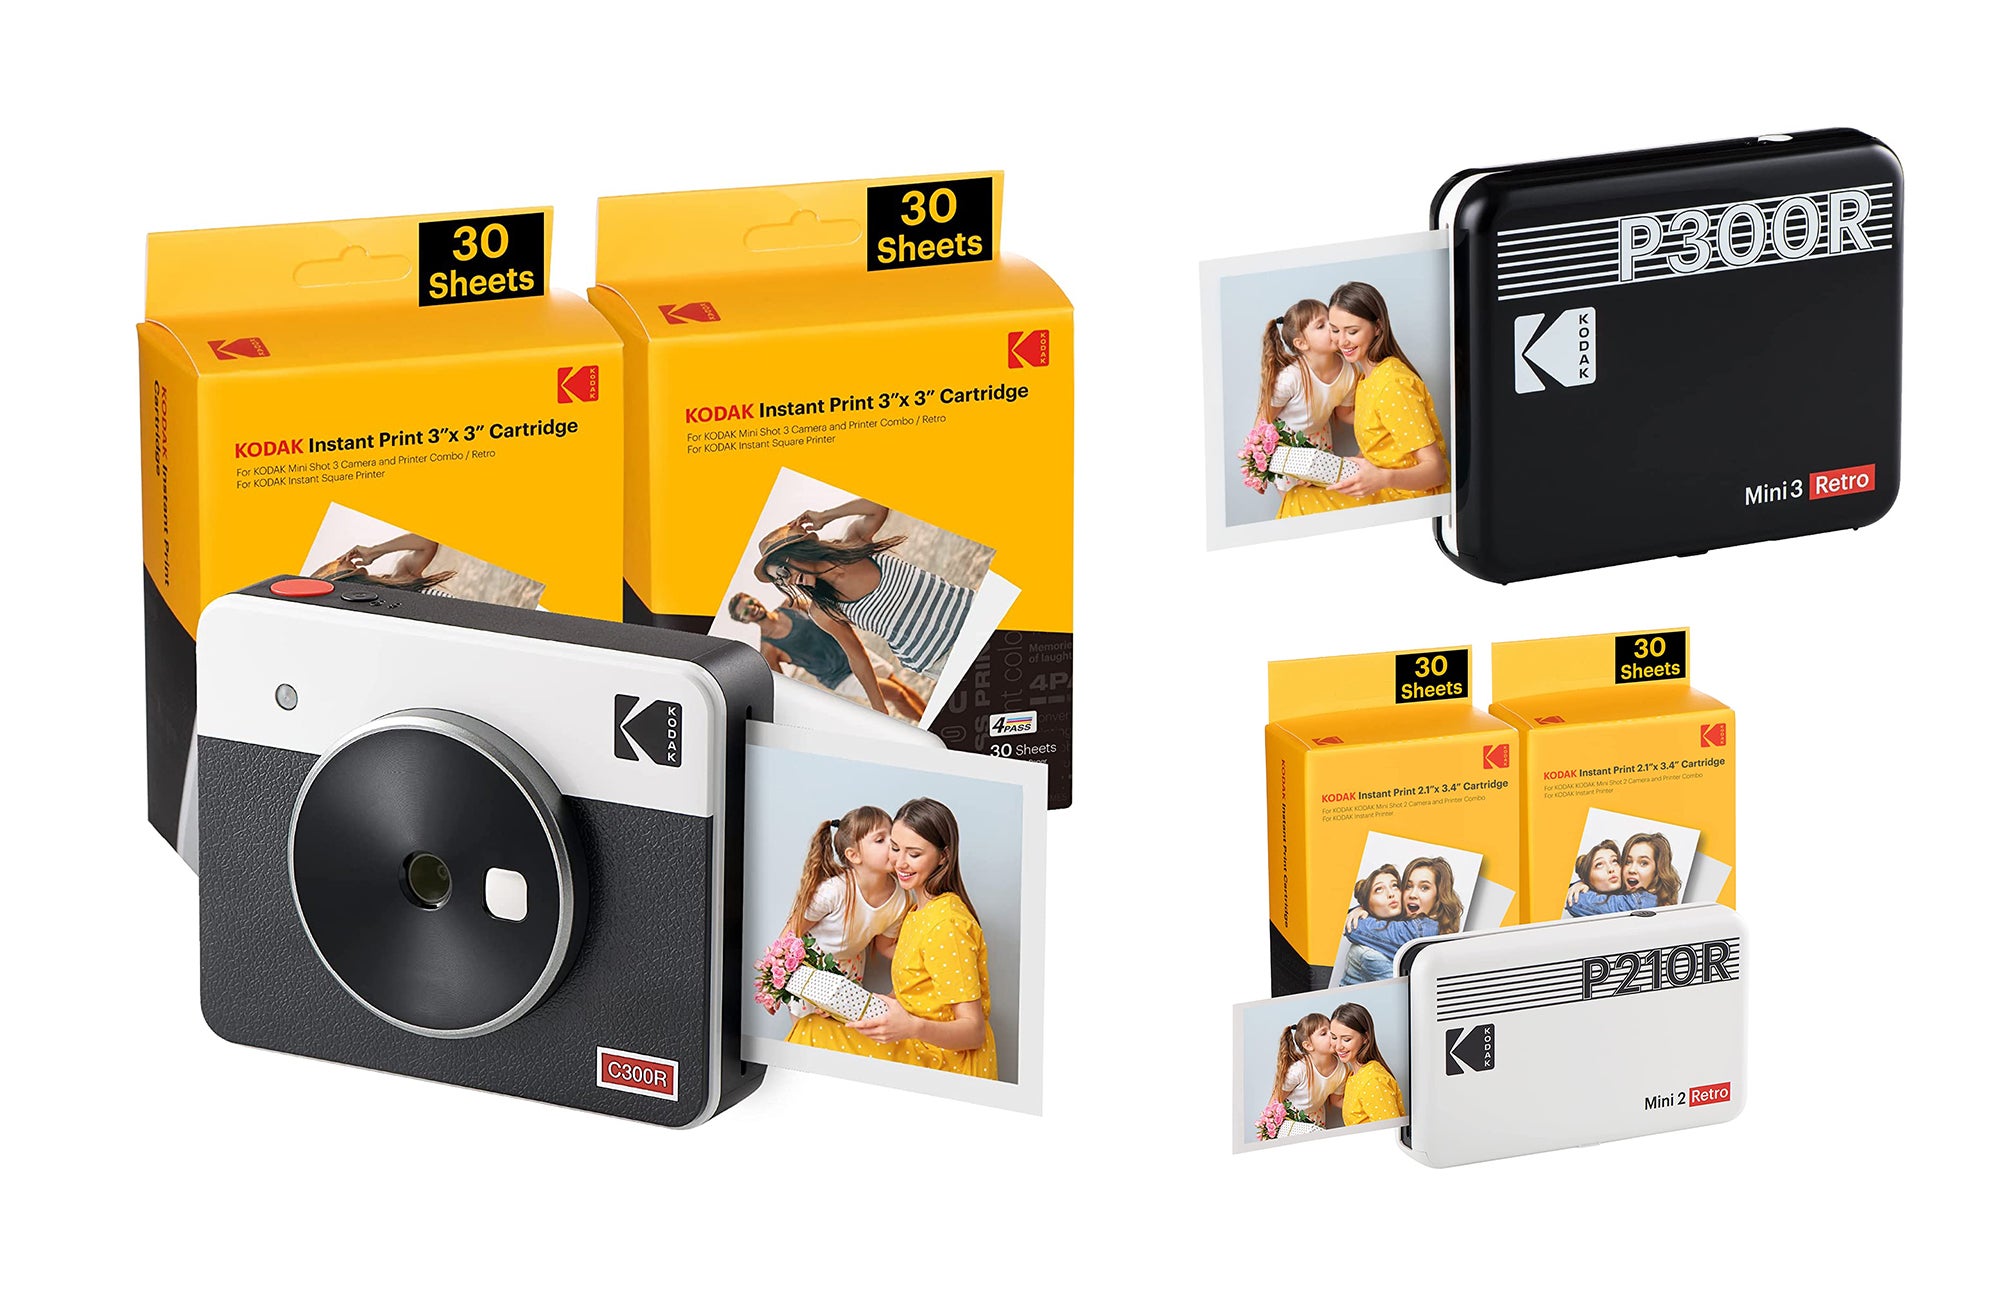 Save up to 50 percent on Kodak photo printers